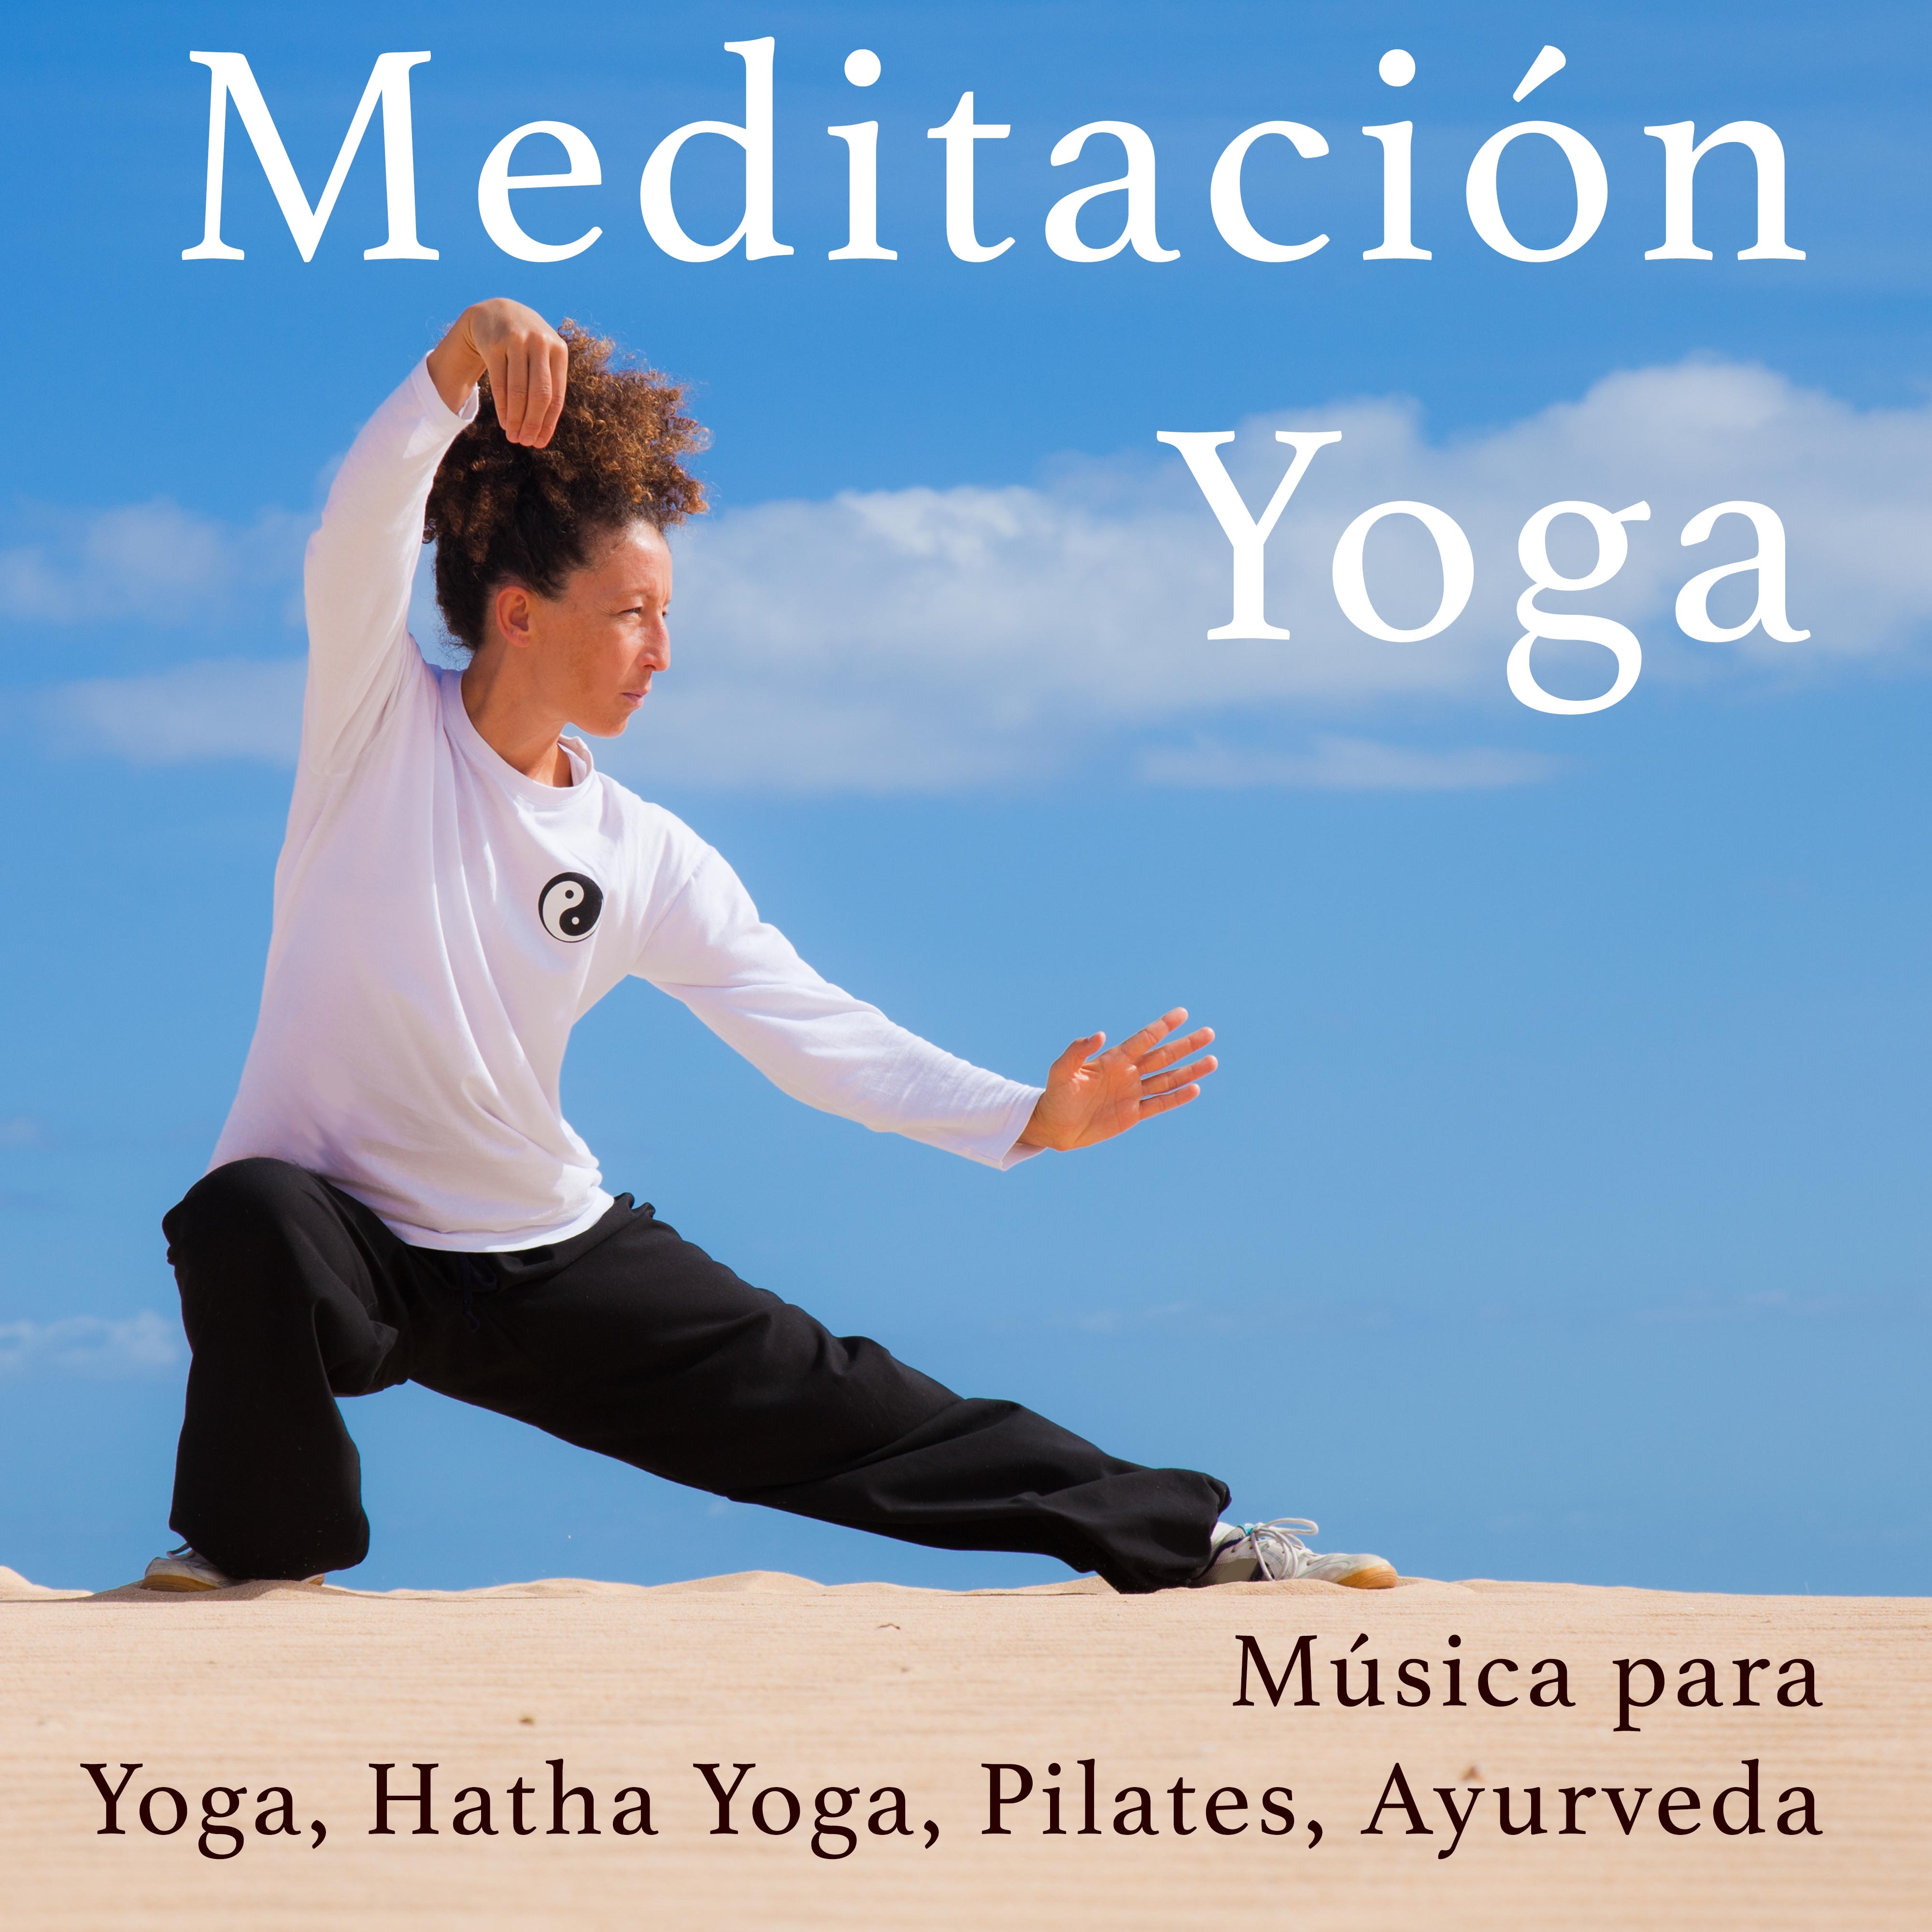 Meditacion Yoga - Musica para Yoga, Hatha Yoga, Pilates, Ayurveda, Dormir Bien